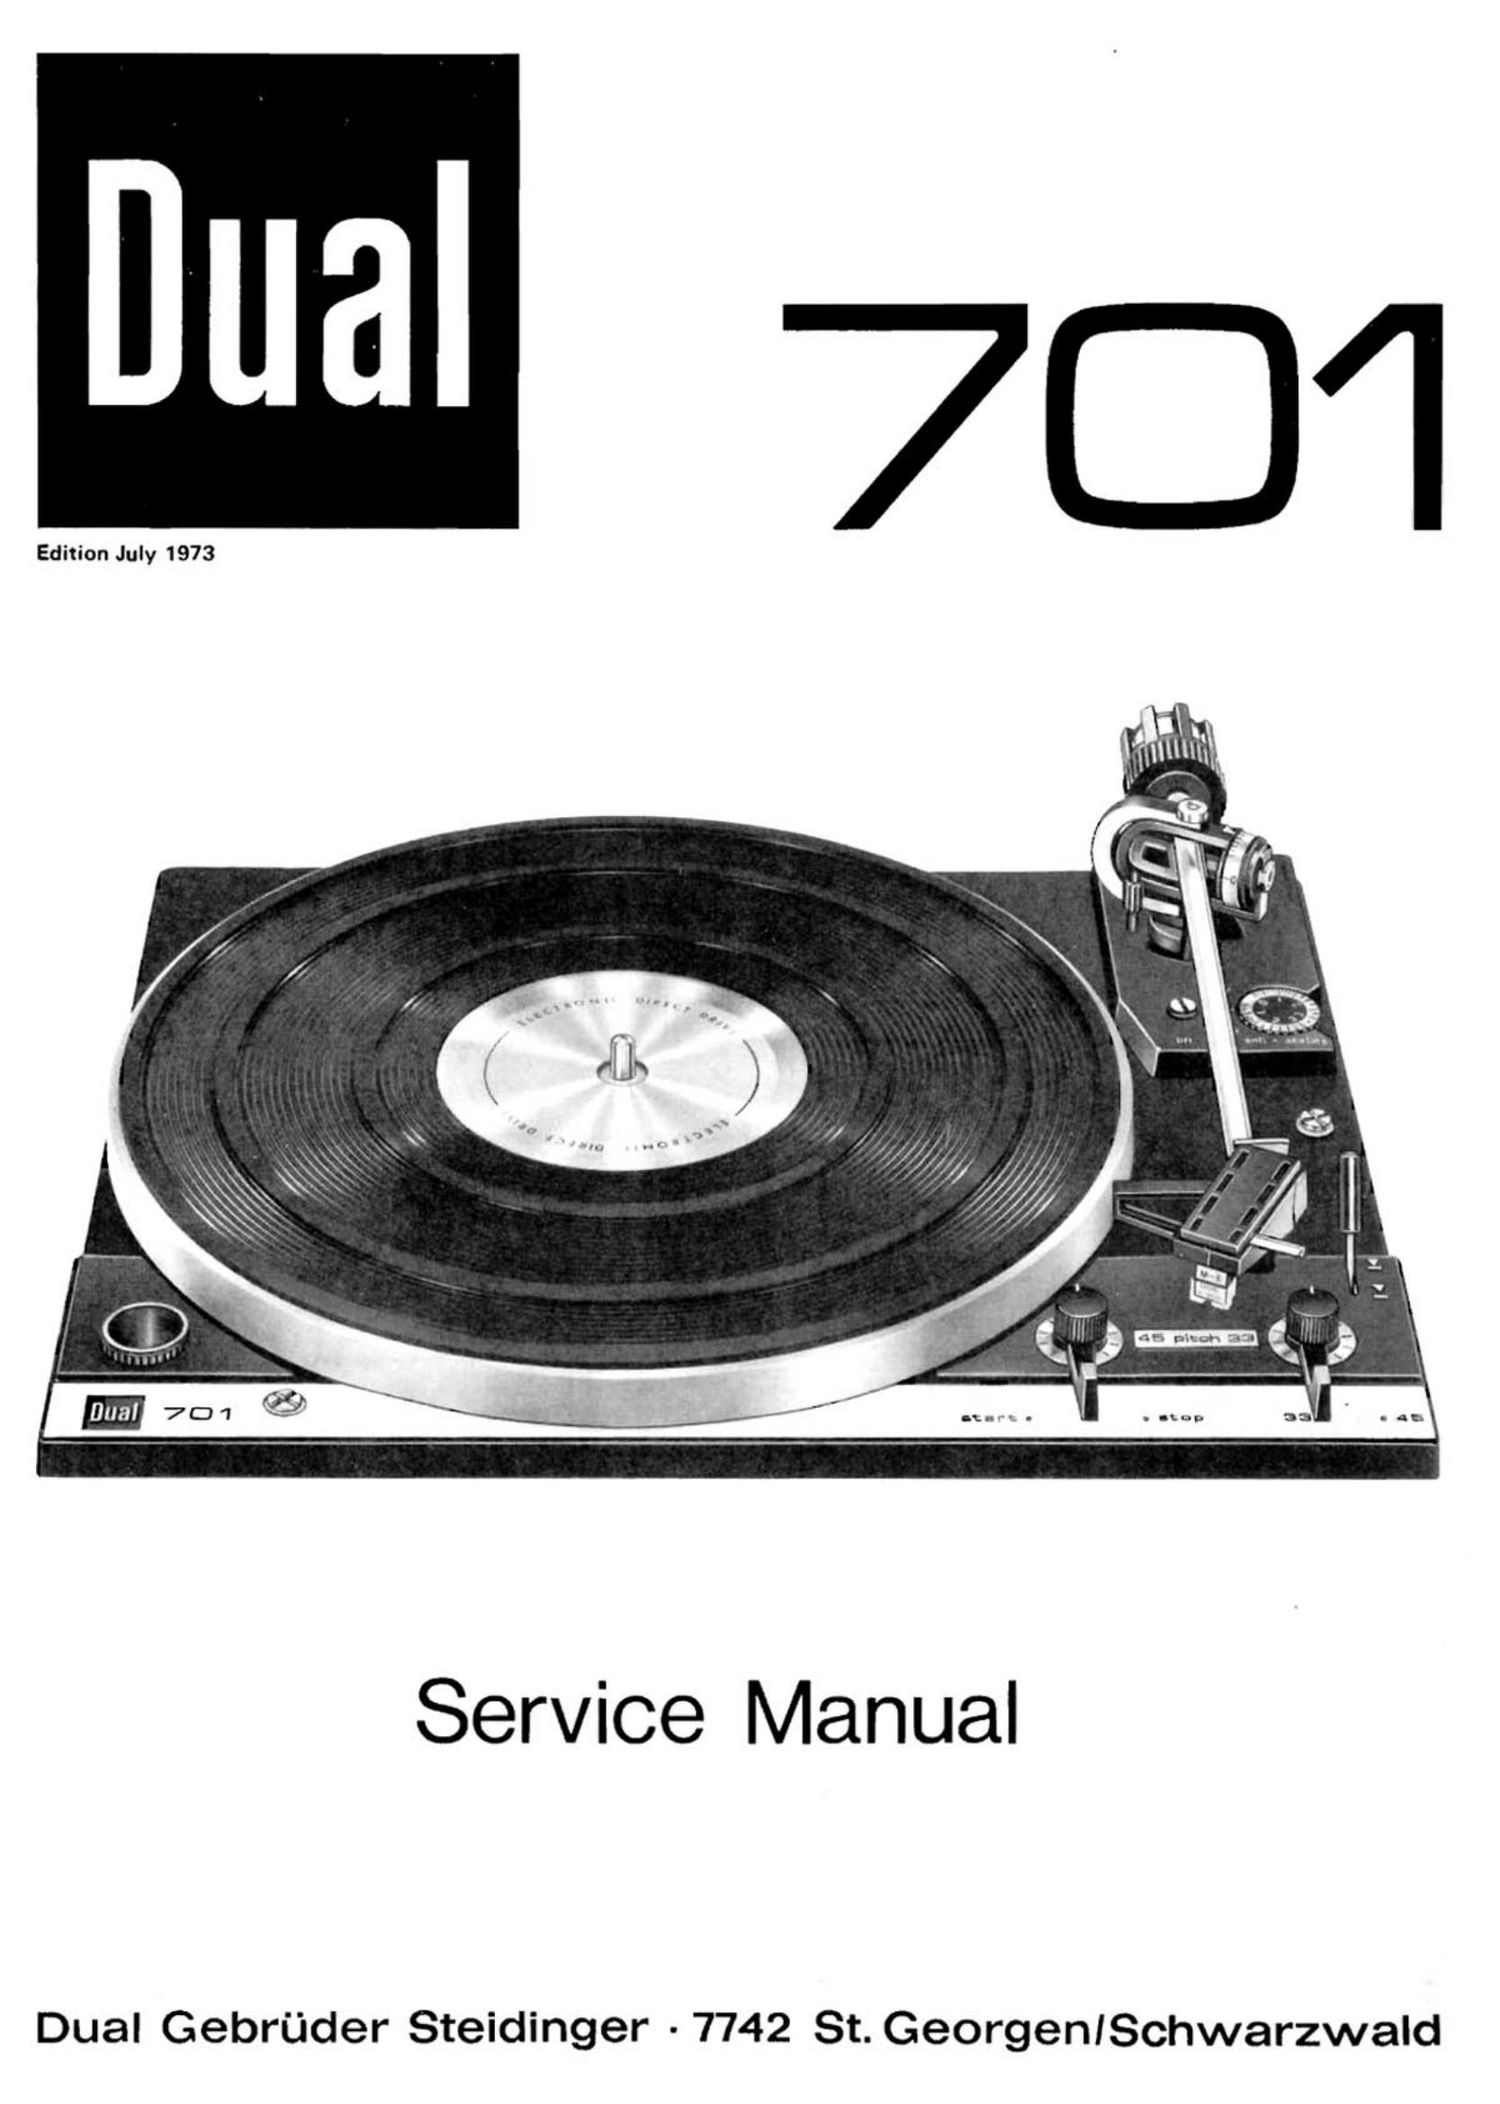 Dual 701 Service Manual